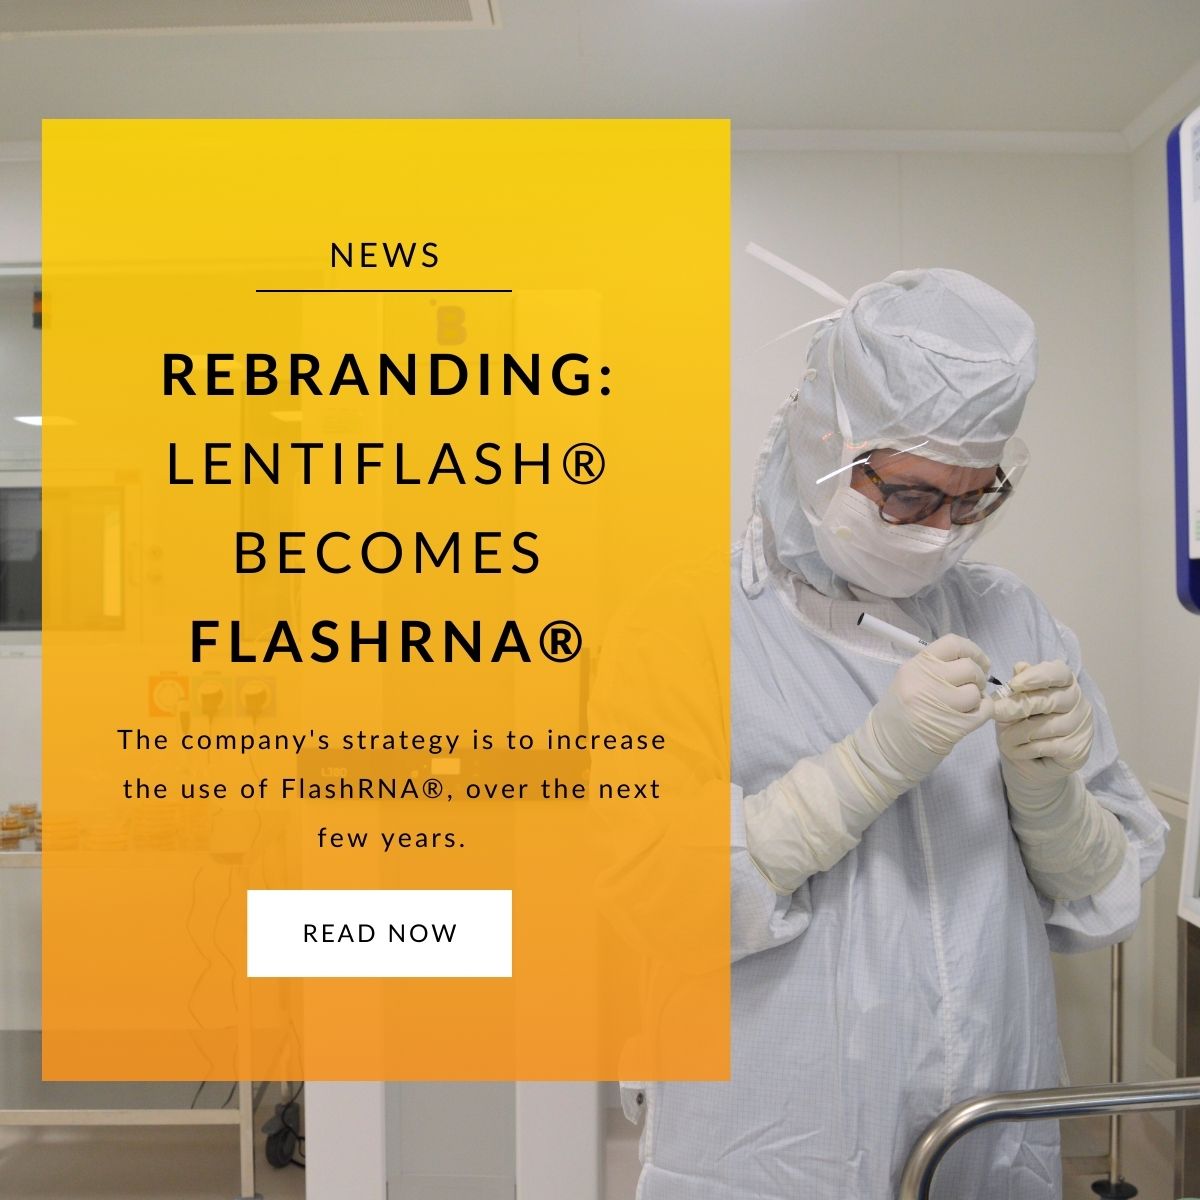 r470_9_lentiflash-becomes-flashrna-flashtherapeutics.jpg